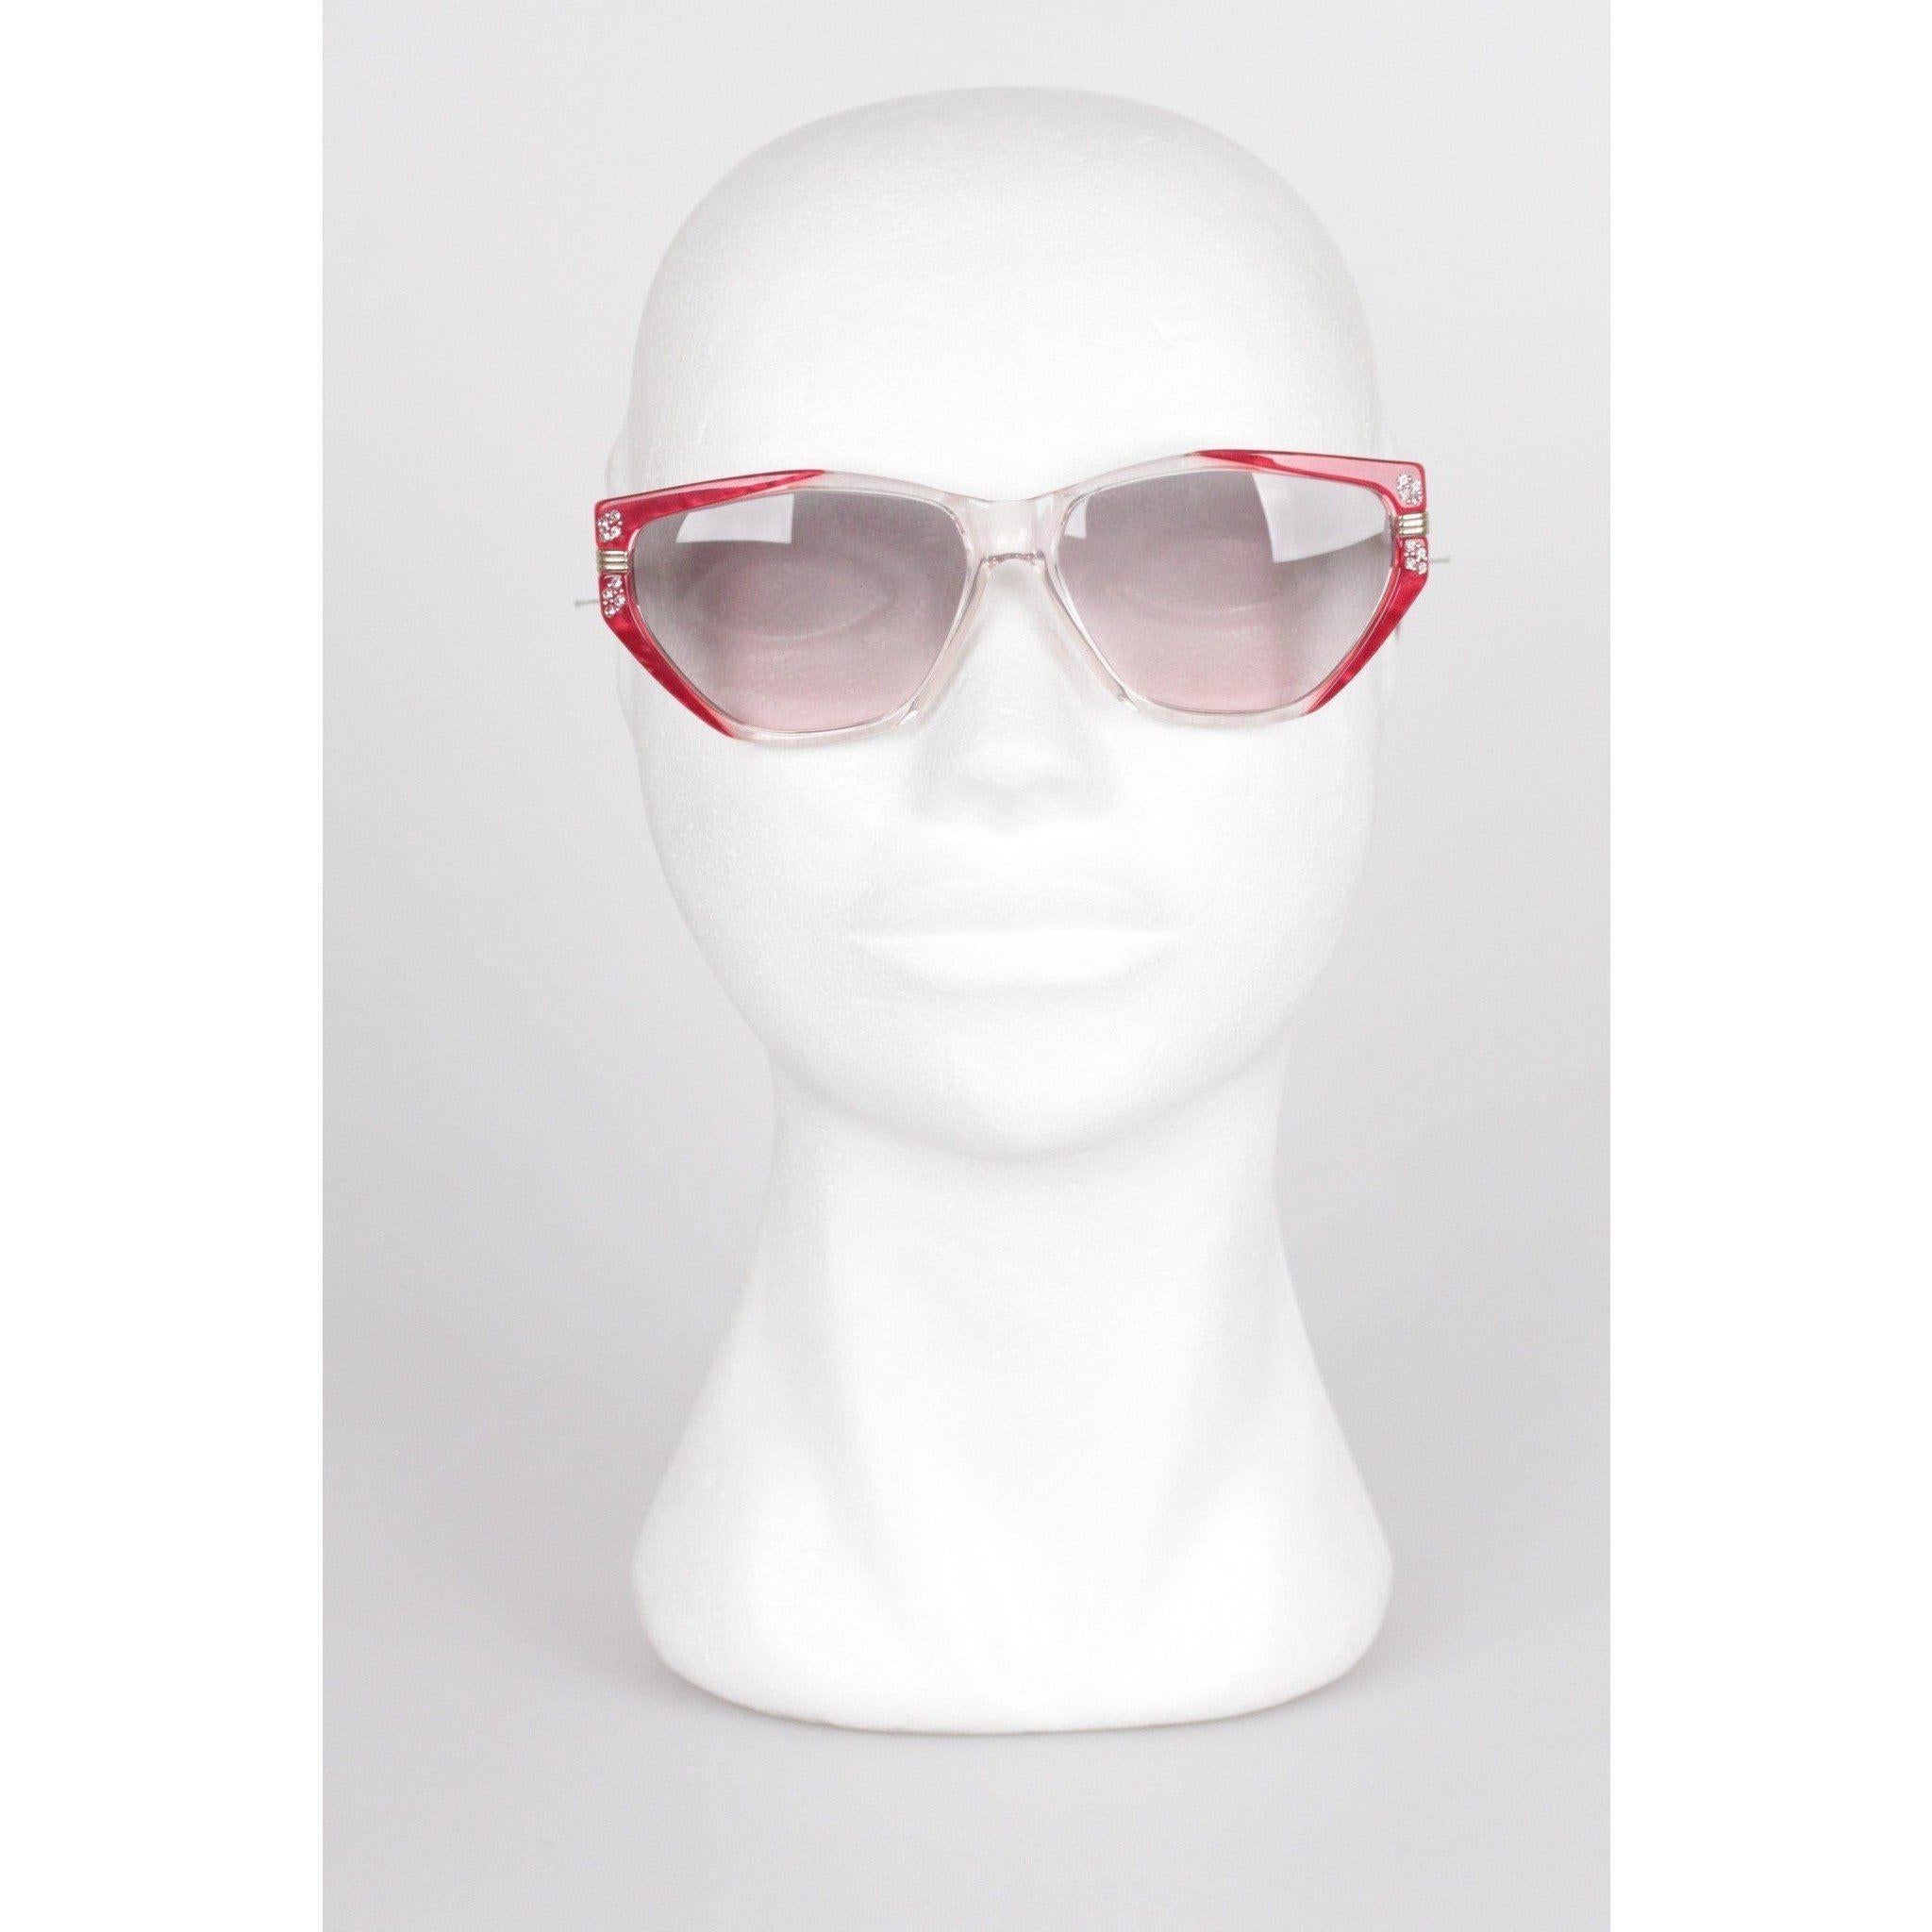 Yves Saint Laurent Vintage Red Sunglasses Euterpe 60mm 6